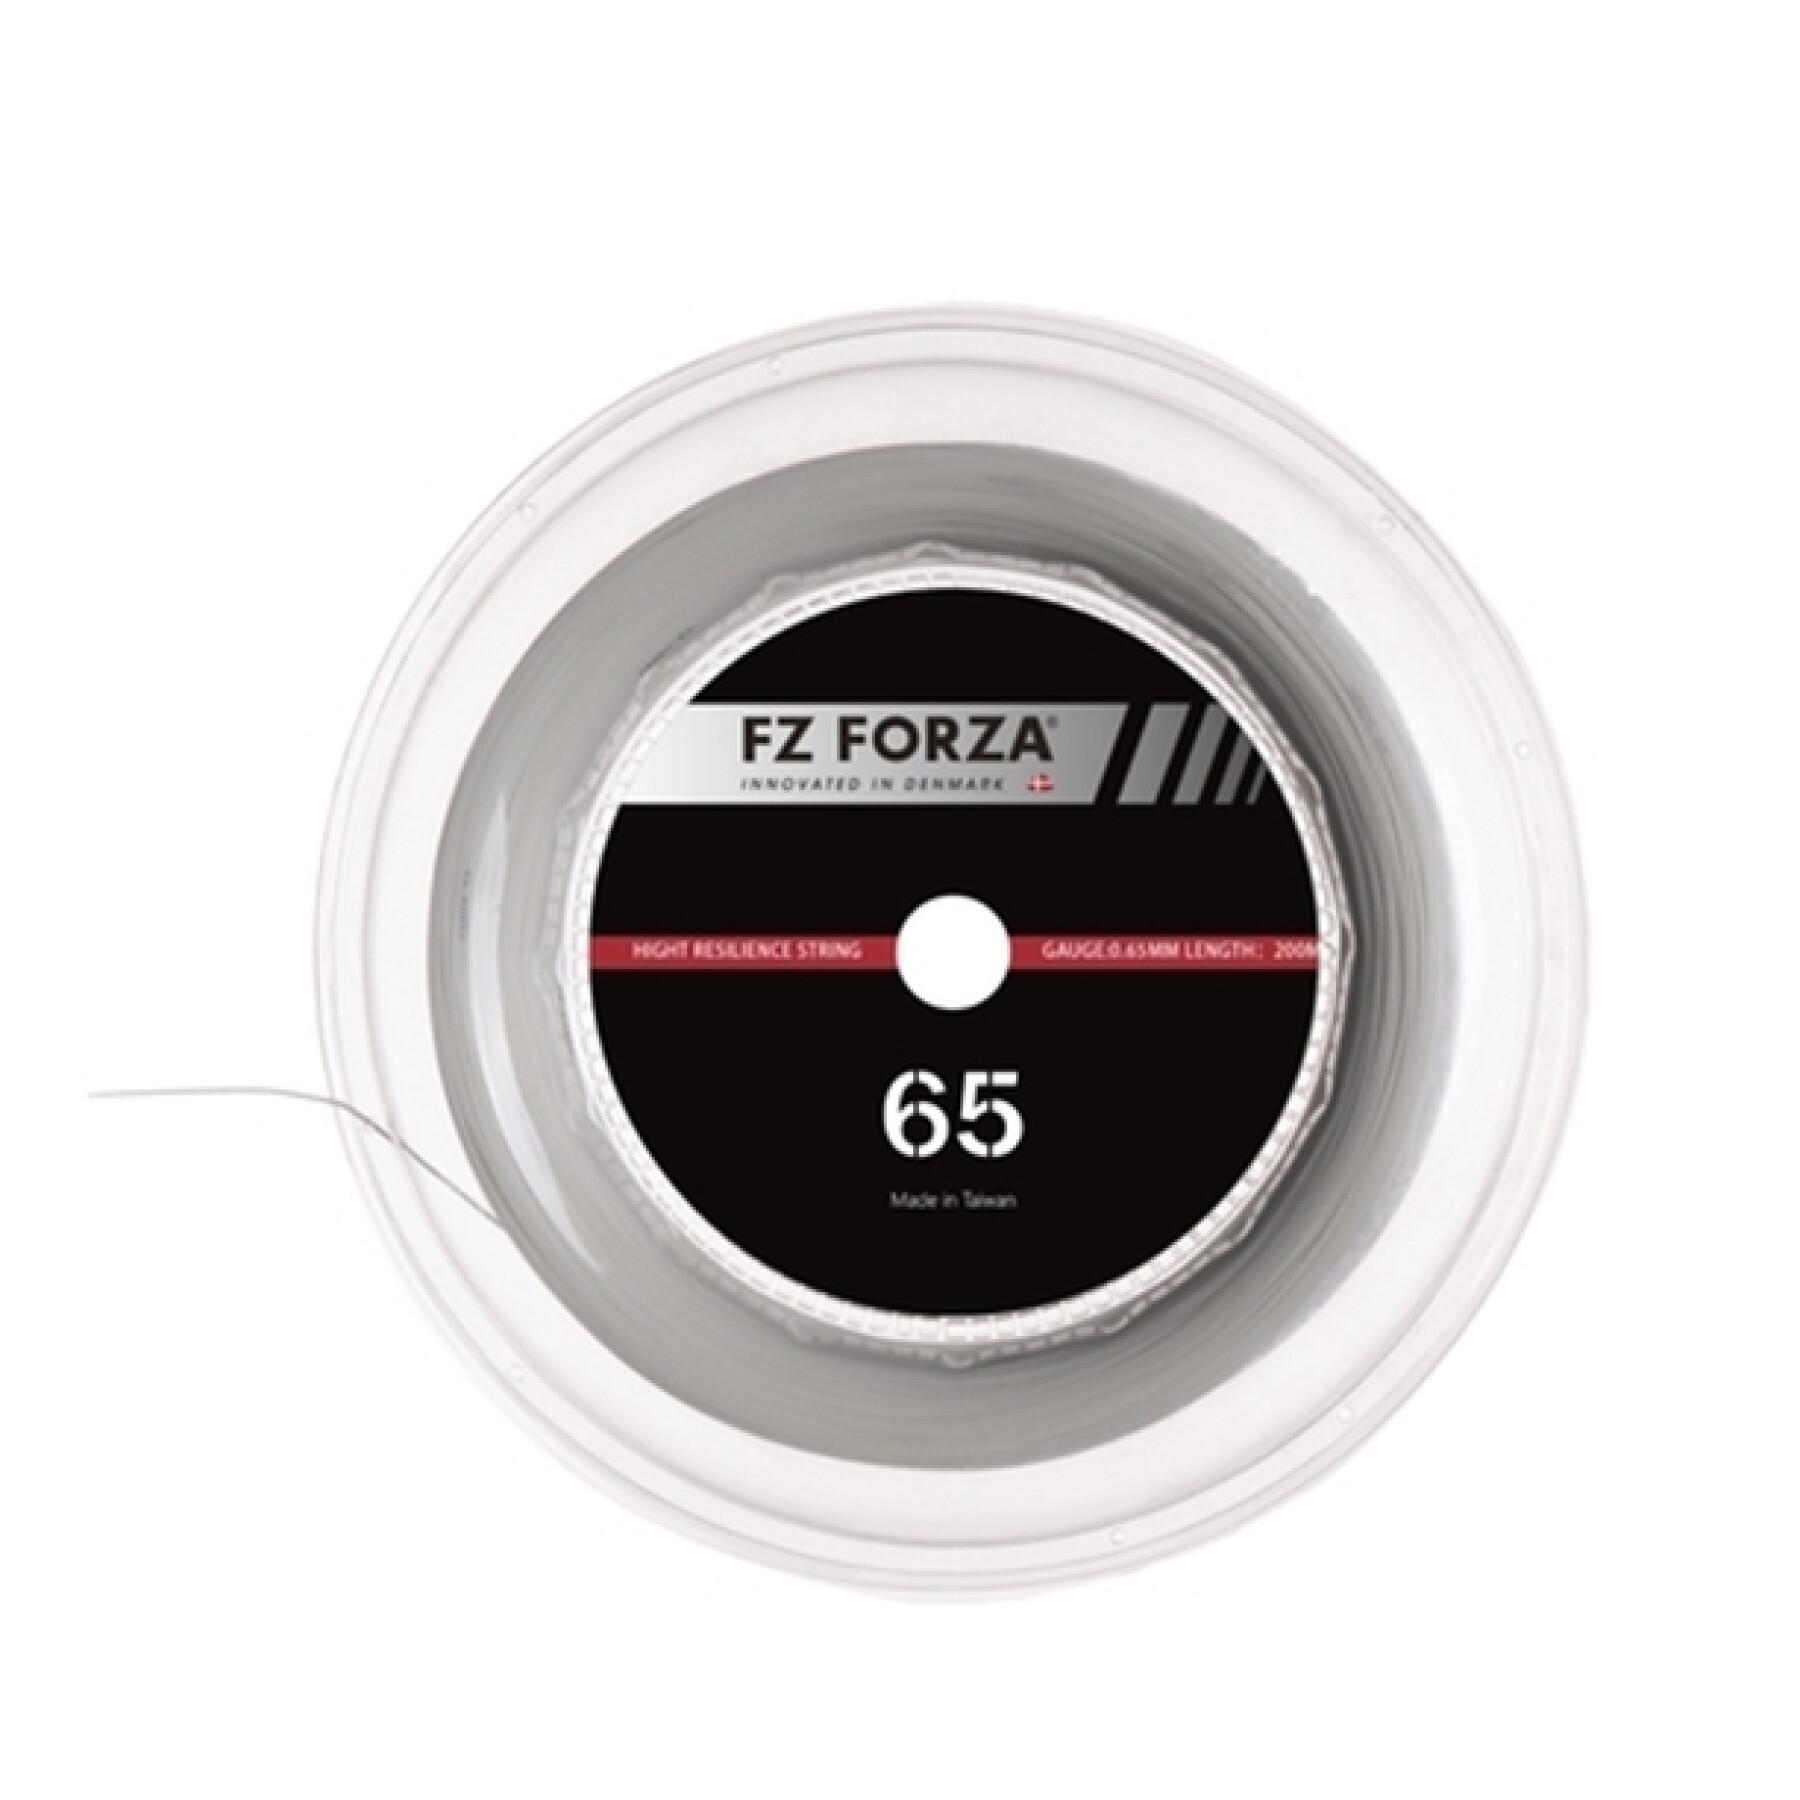 Corda de Badminton FZ Forza 65 Power Reel